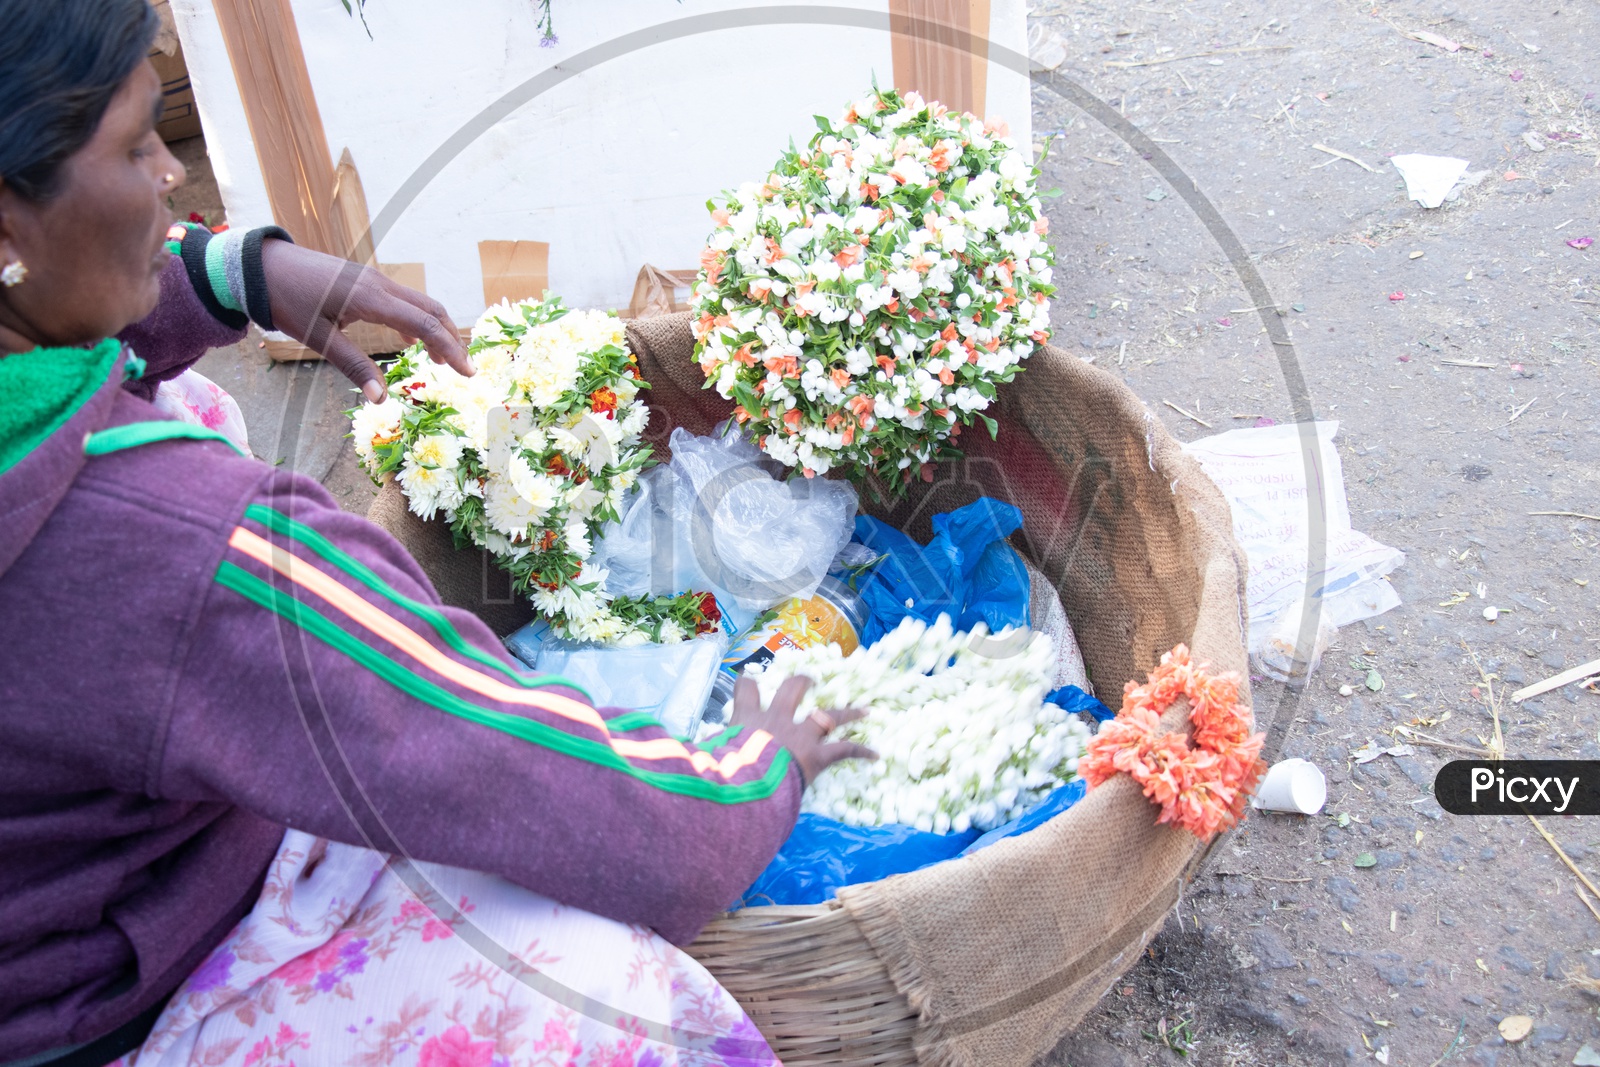 Woman Vendor With Flower Garlands Basket At a Flower Market